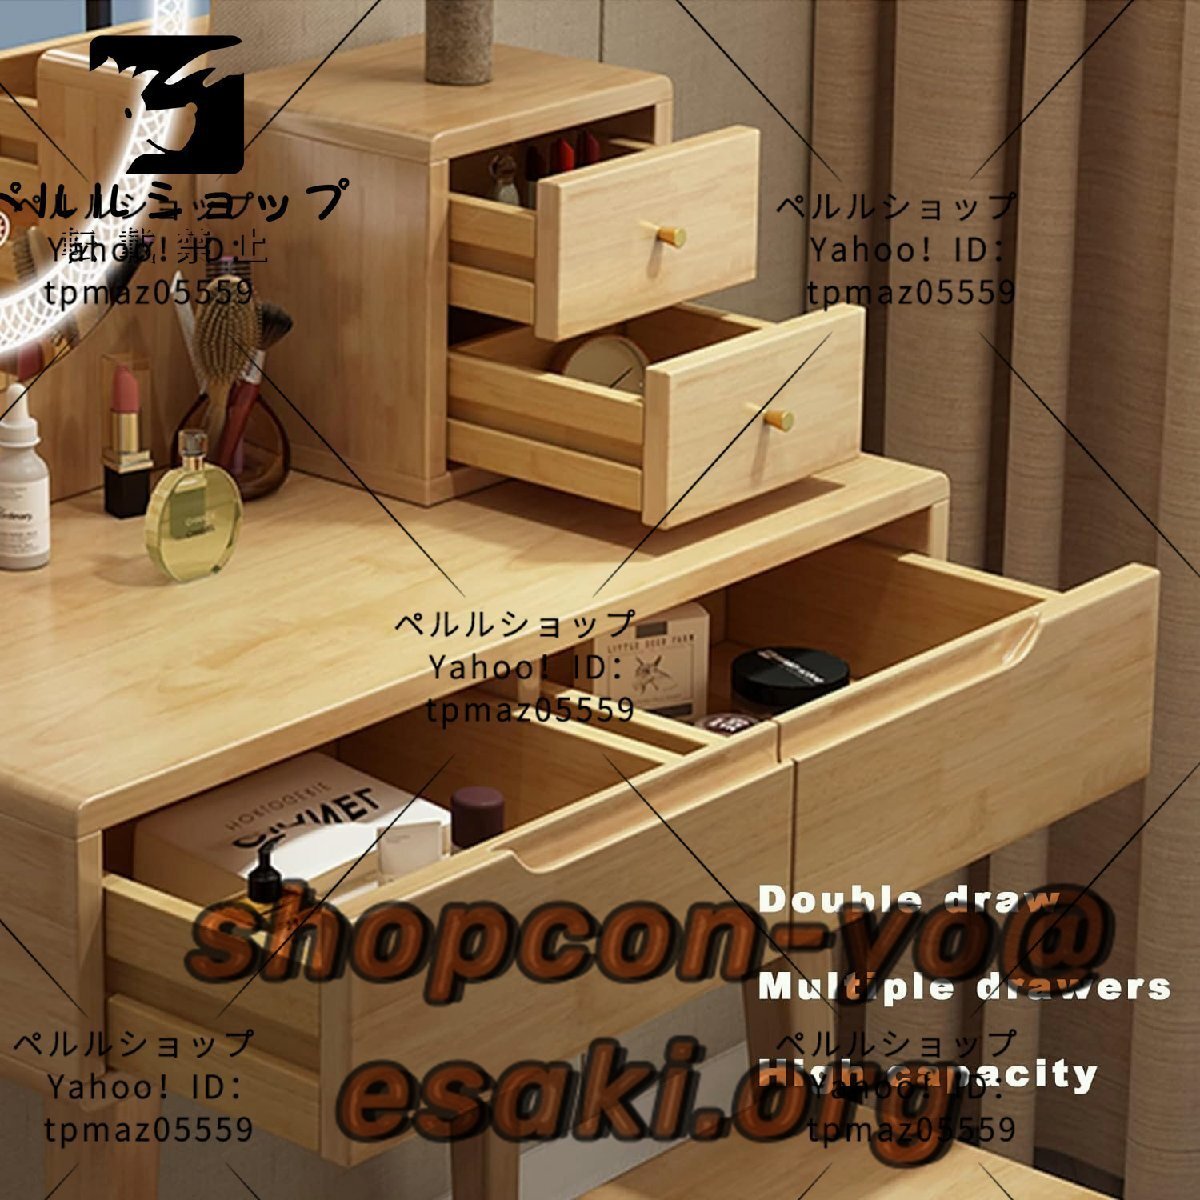  dresser .? pcs 3 color . change light strip storage drawer attaching wooden. modern . bed room furniture walnut color + white color double draw 